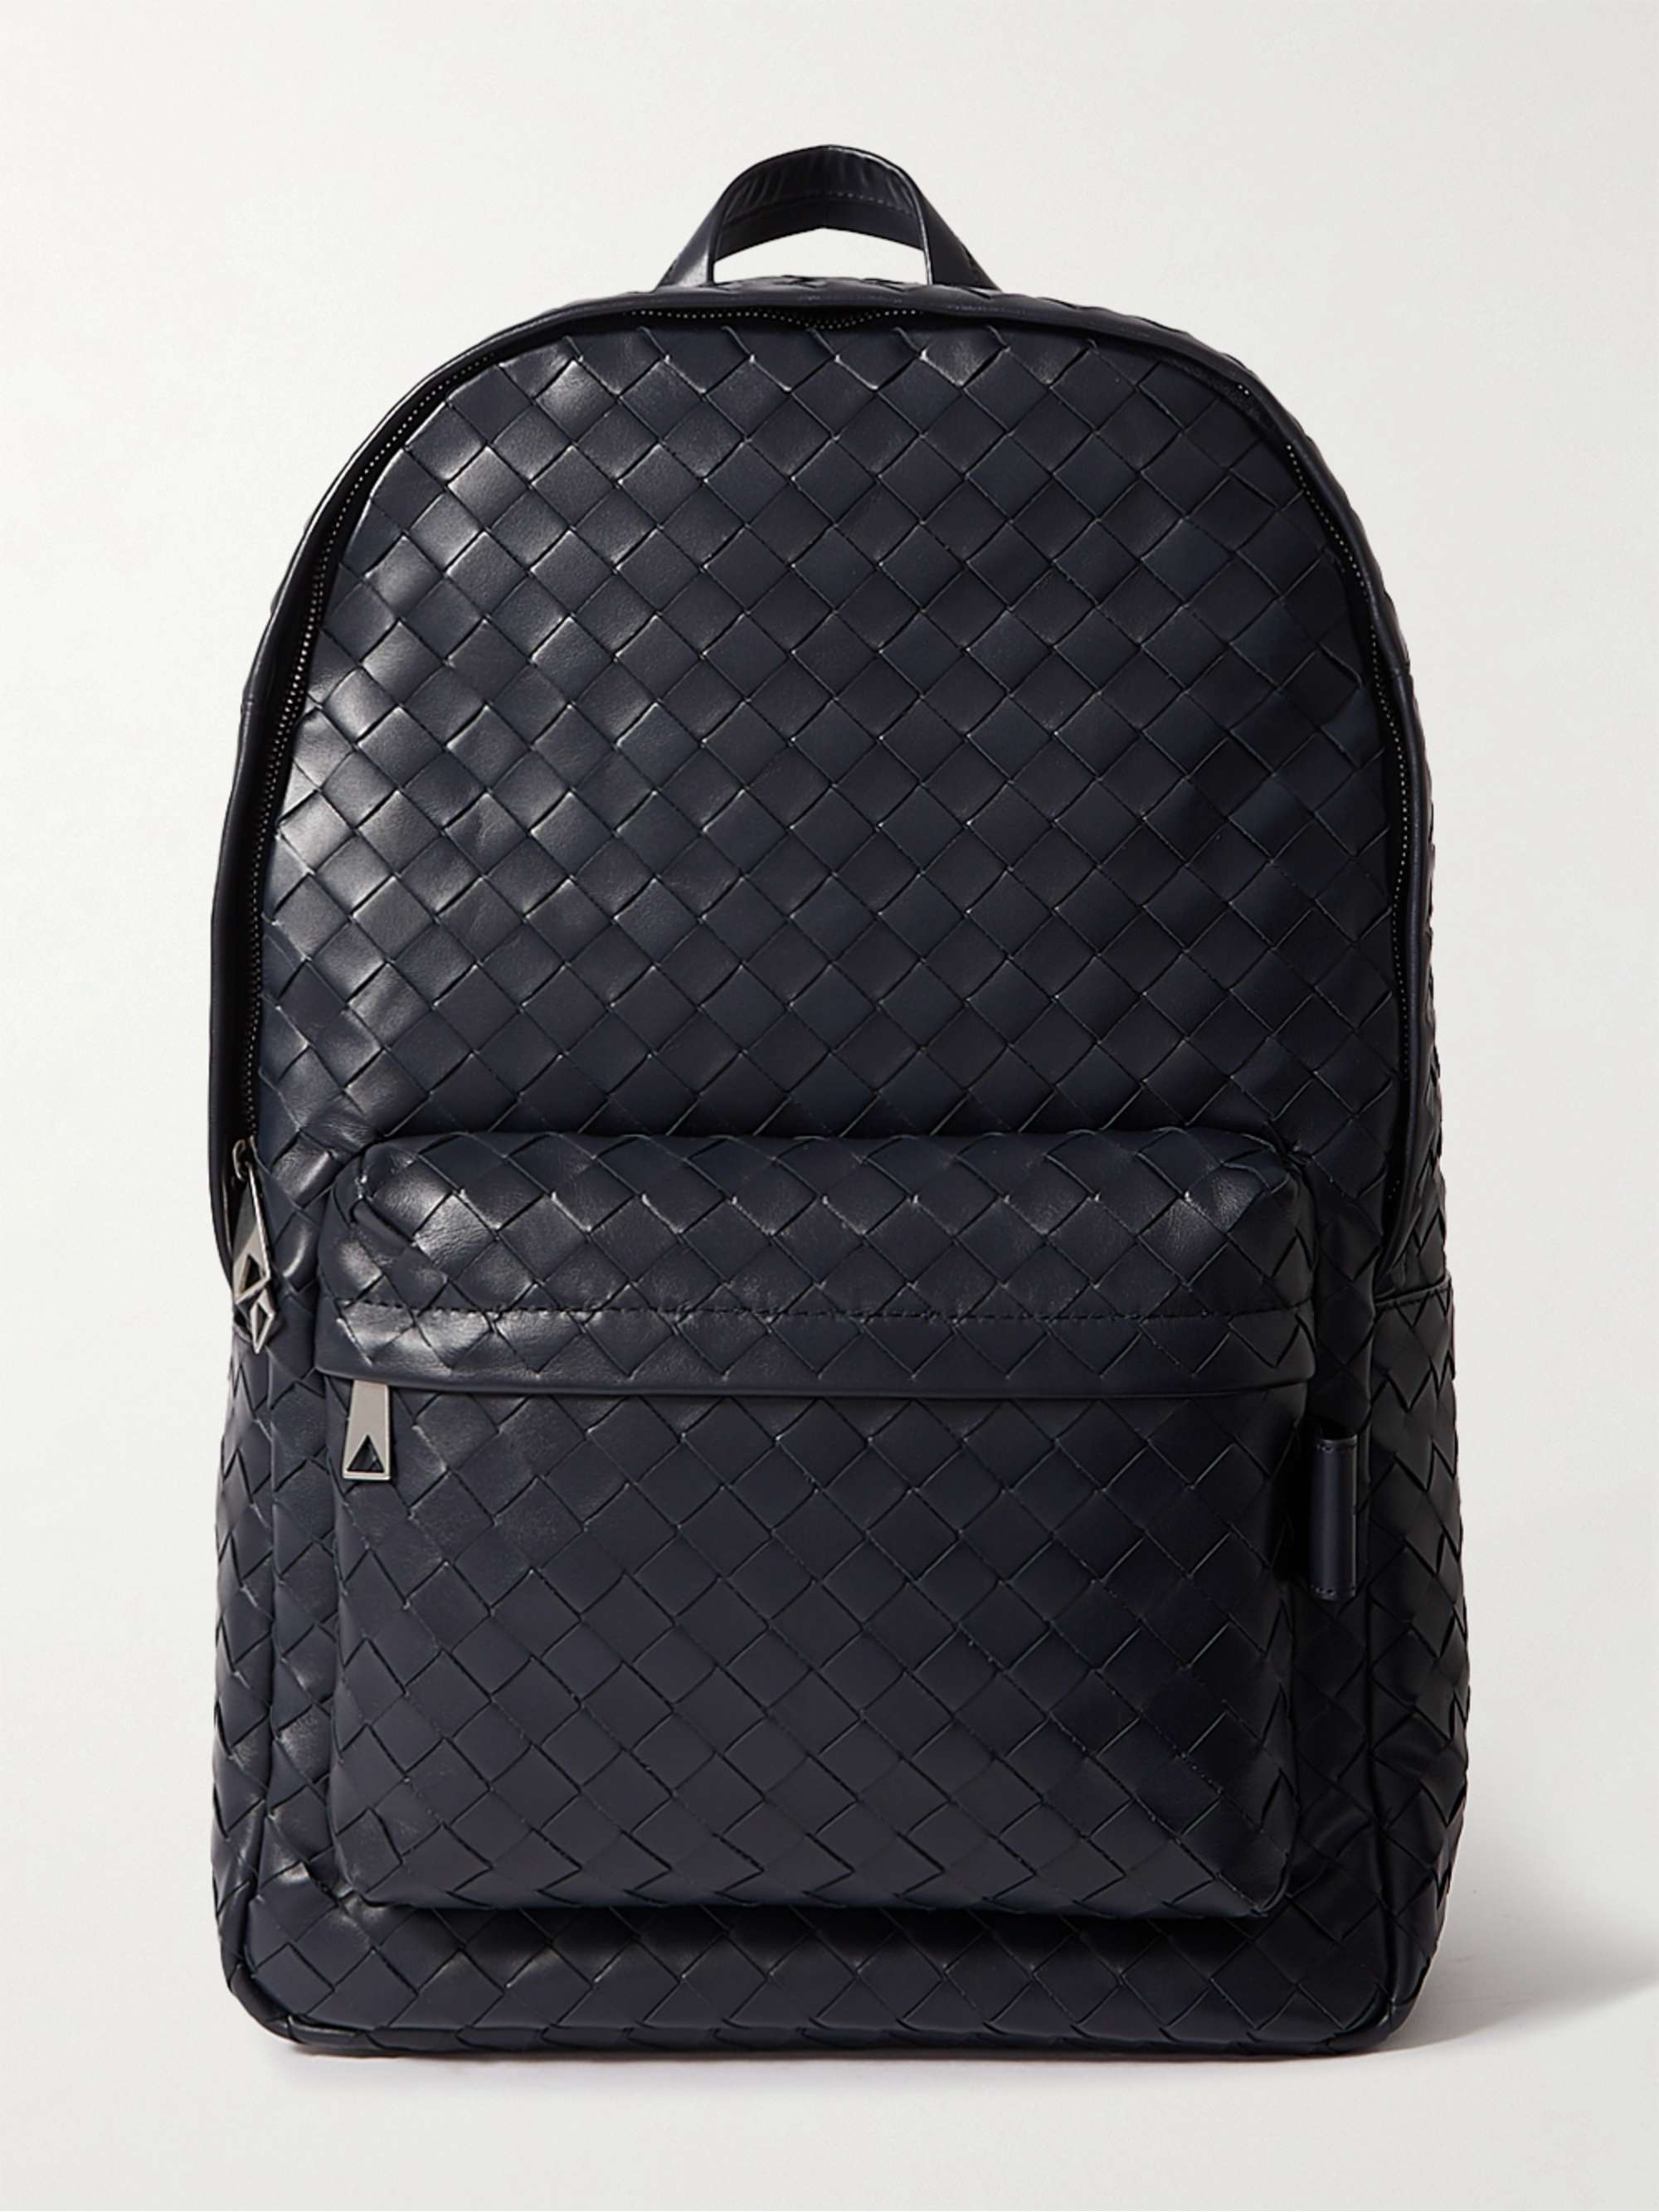 Bagind Genuine Leather Backpack 50 L Laptop Backpack Brown - Price in India  | Flipkart.com